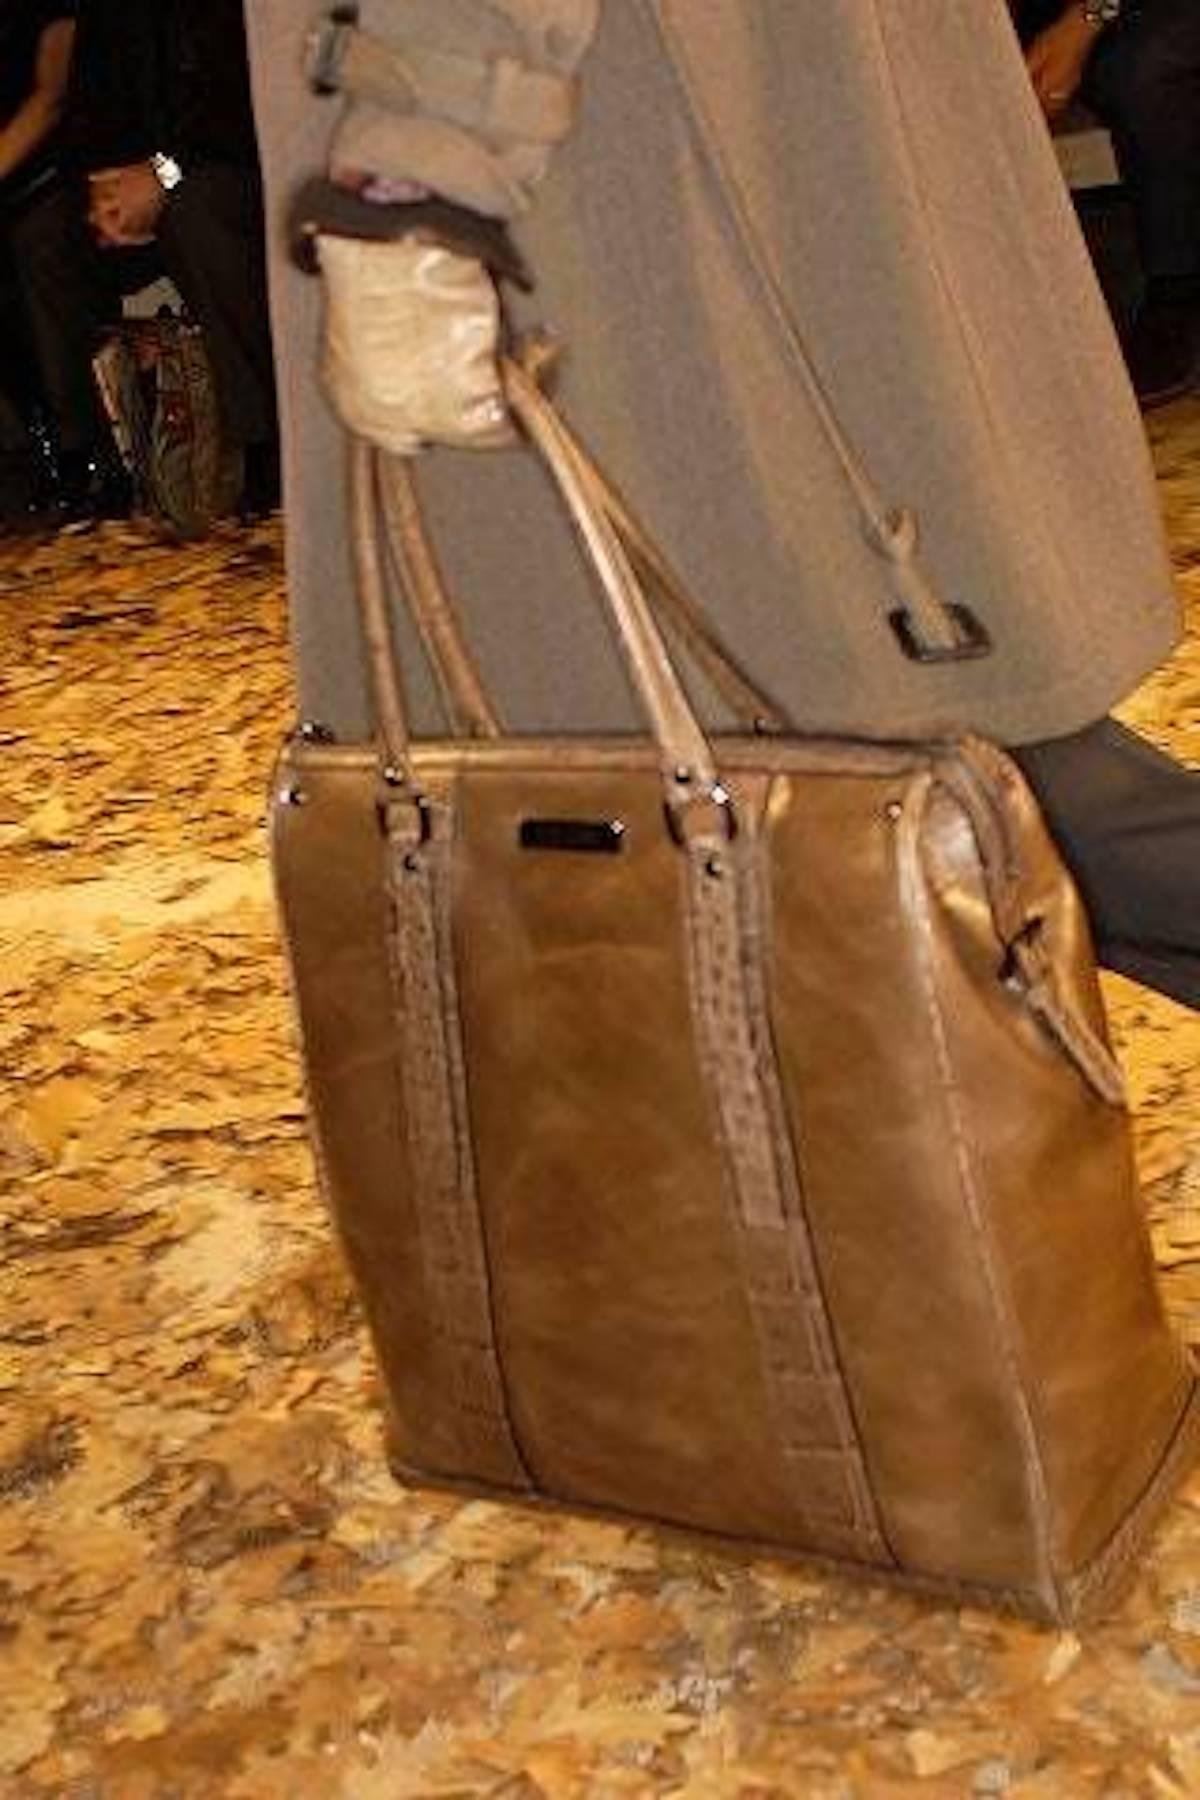 Men's BURBERRY PRORSUM Fall 2008 Brown Leather Ostrich Trim Tote Bag